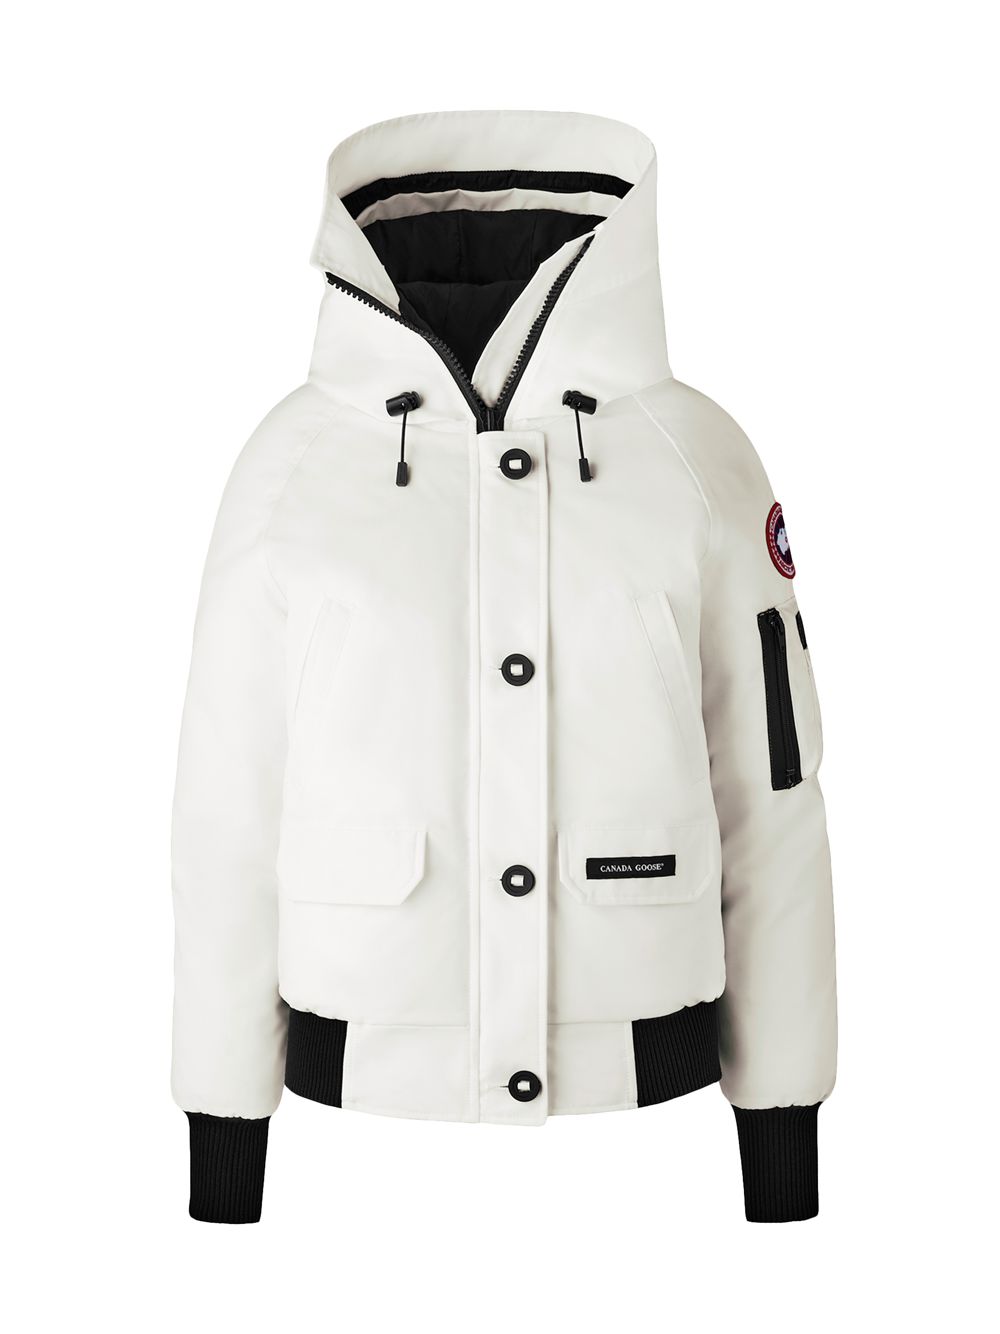 Пуховая куртка-бомбер Chilliwack Canada Goose, белый пуховик chilliwack бомбер canada goose kids черный